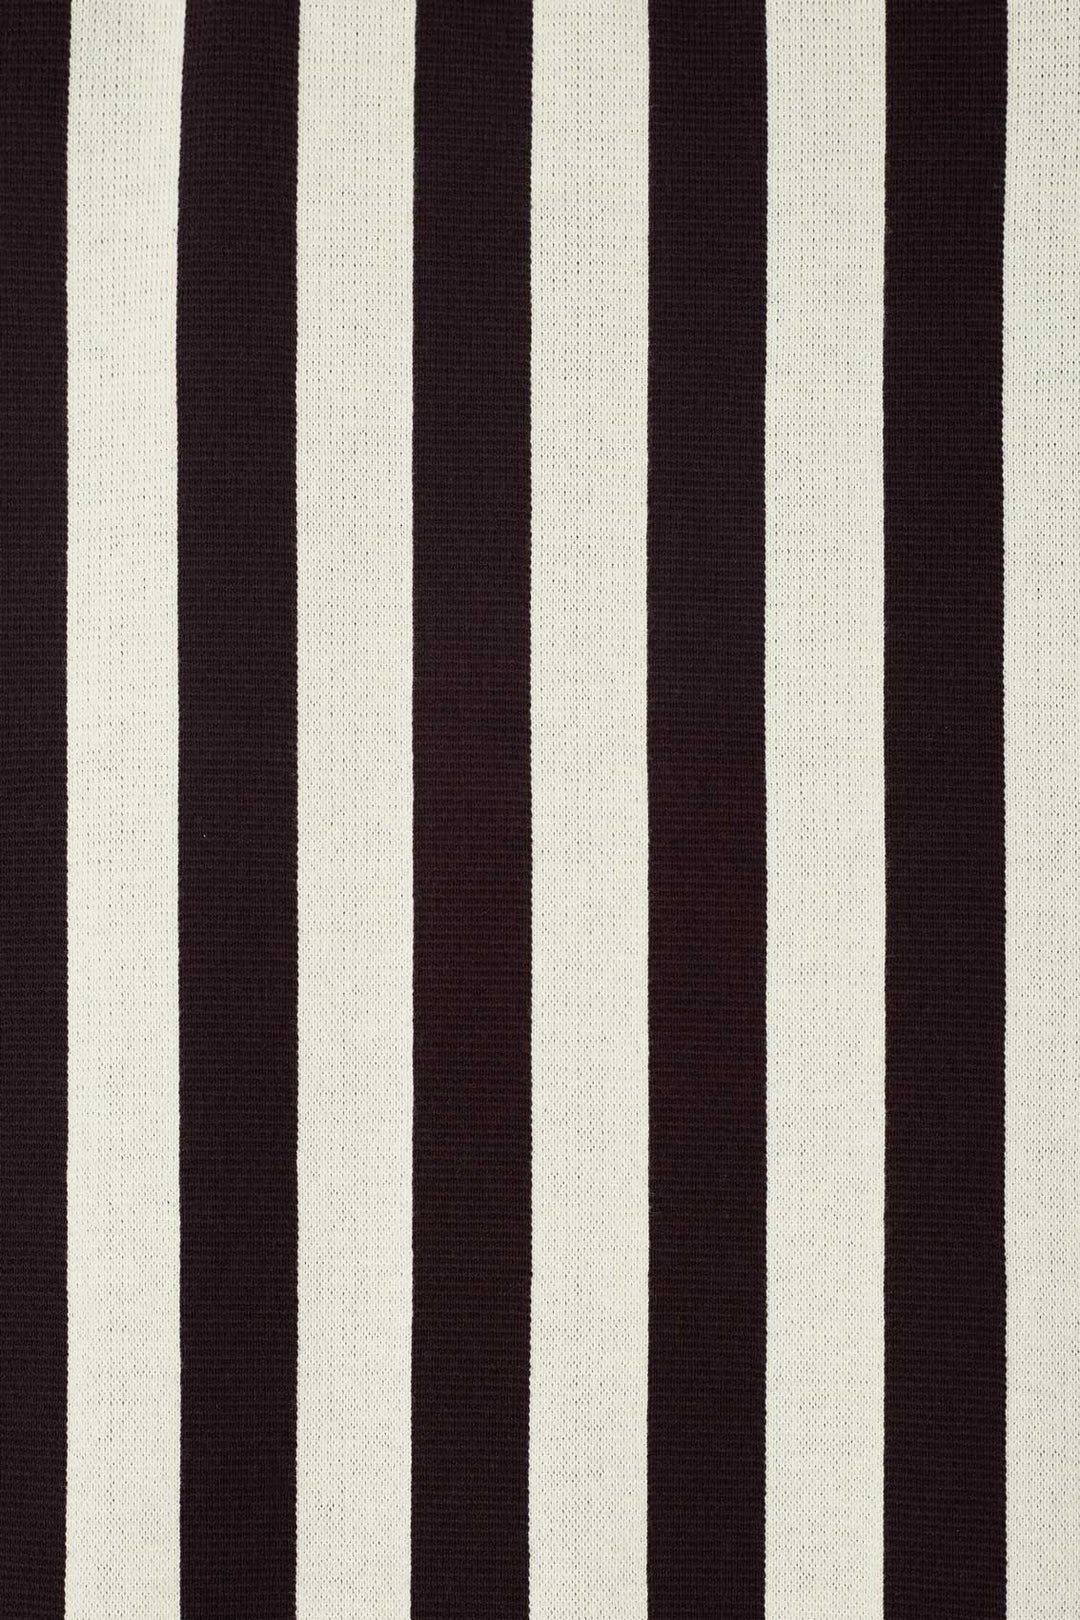 KNITTED LONG SKIRT / moka brown and cream stripes - 4